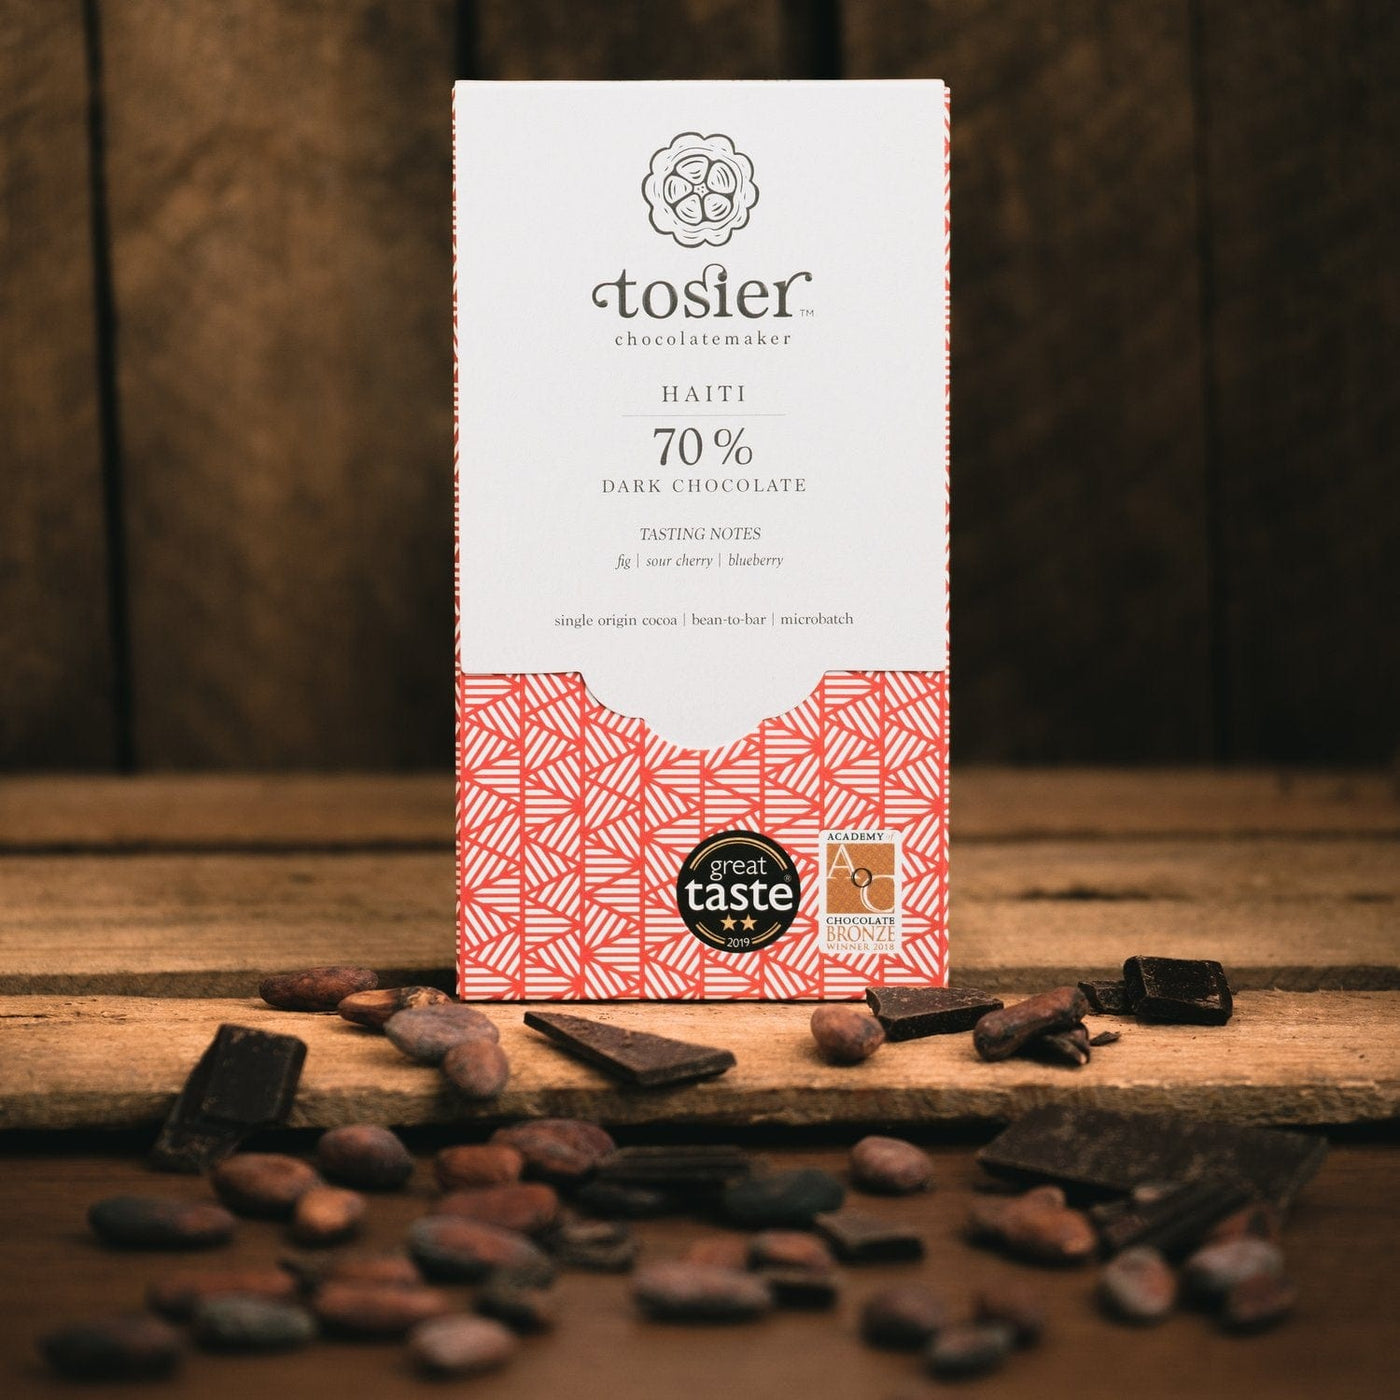 Tosier Chocolate 70% PISA Haiti 2020 Harvest 60g bar